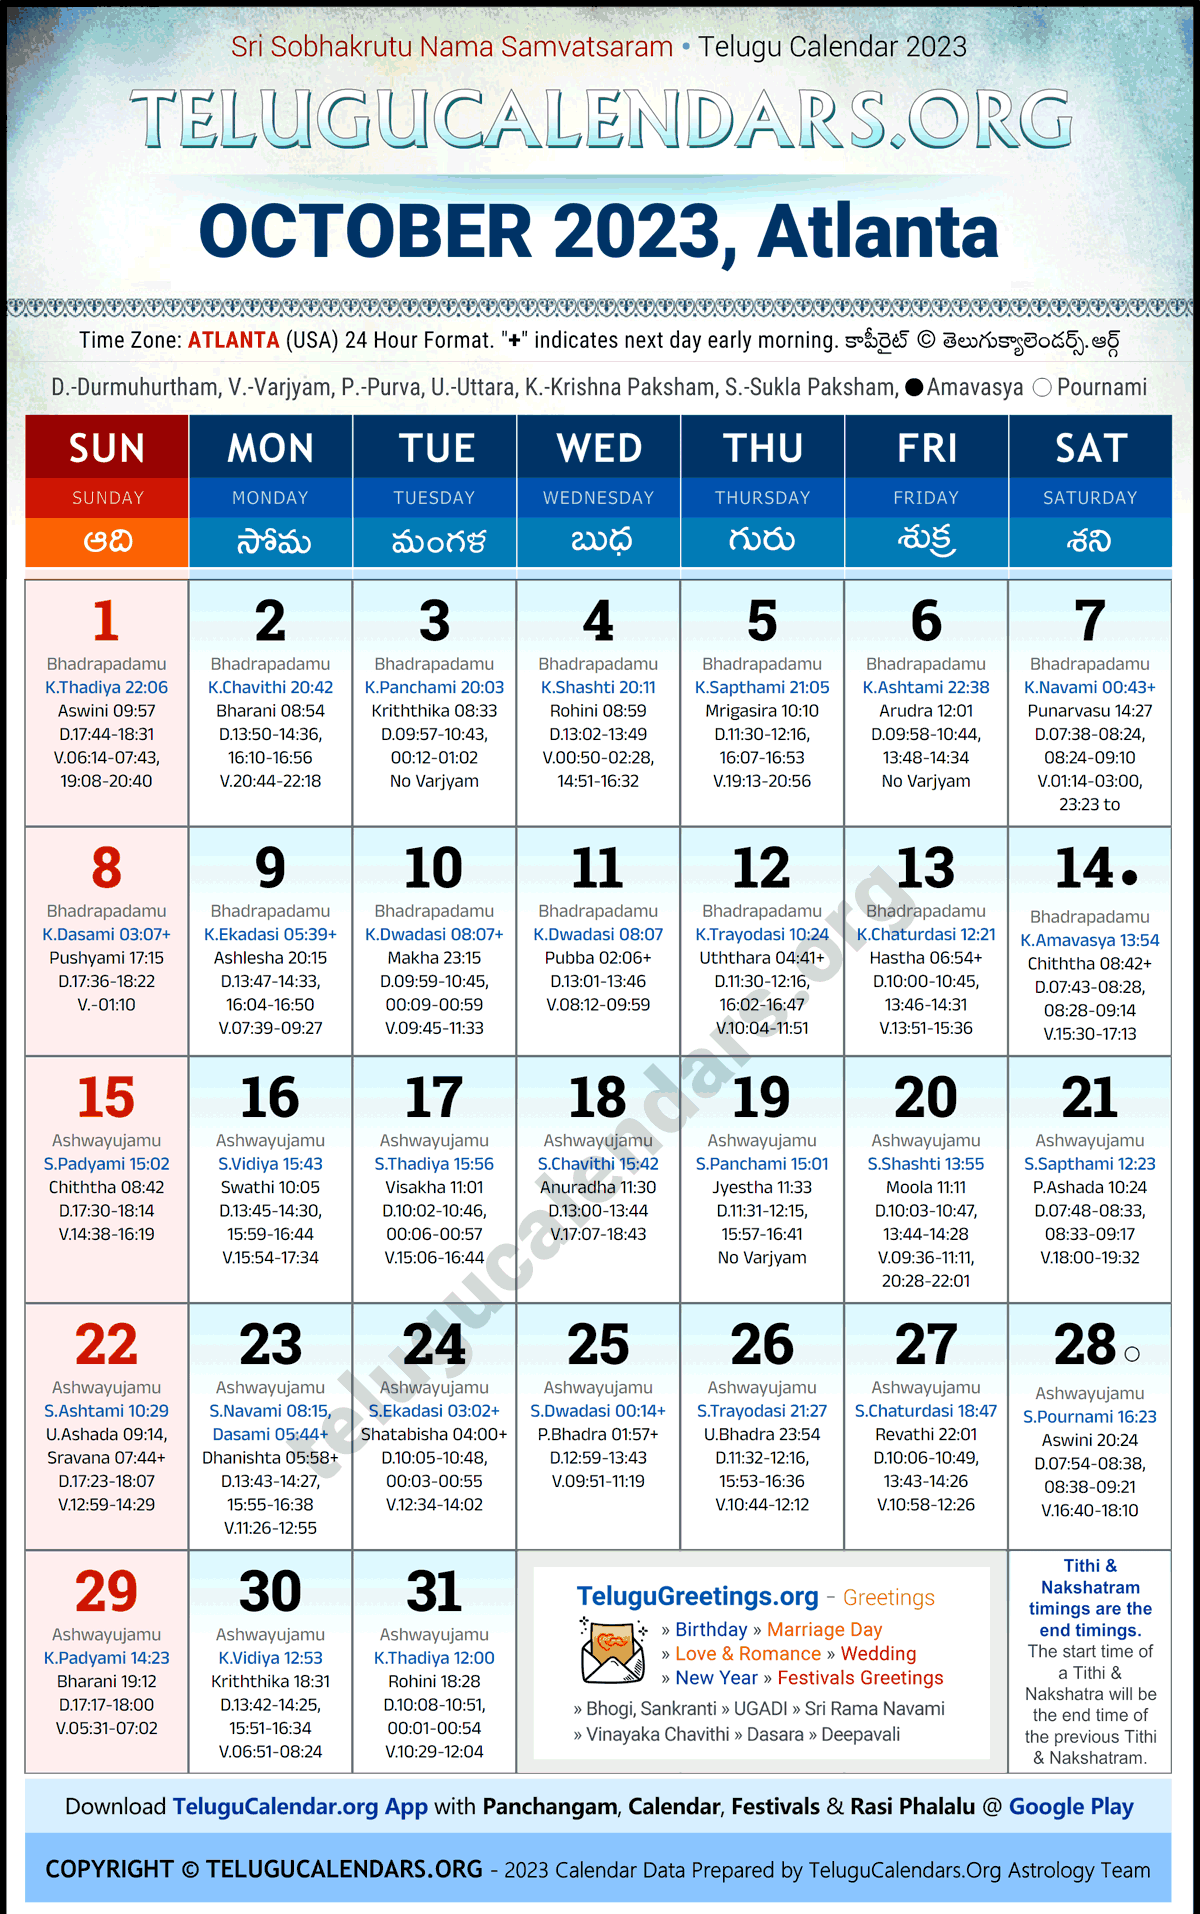 Telugu Calendar 2023 October Festivals for Atlanta